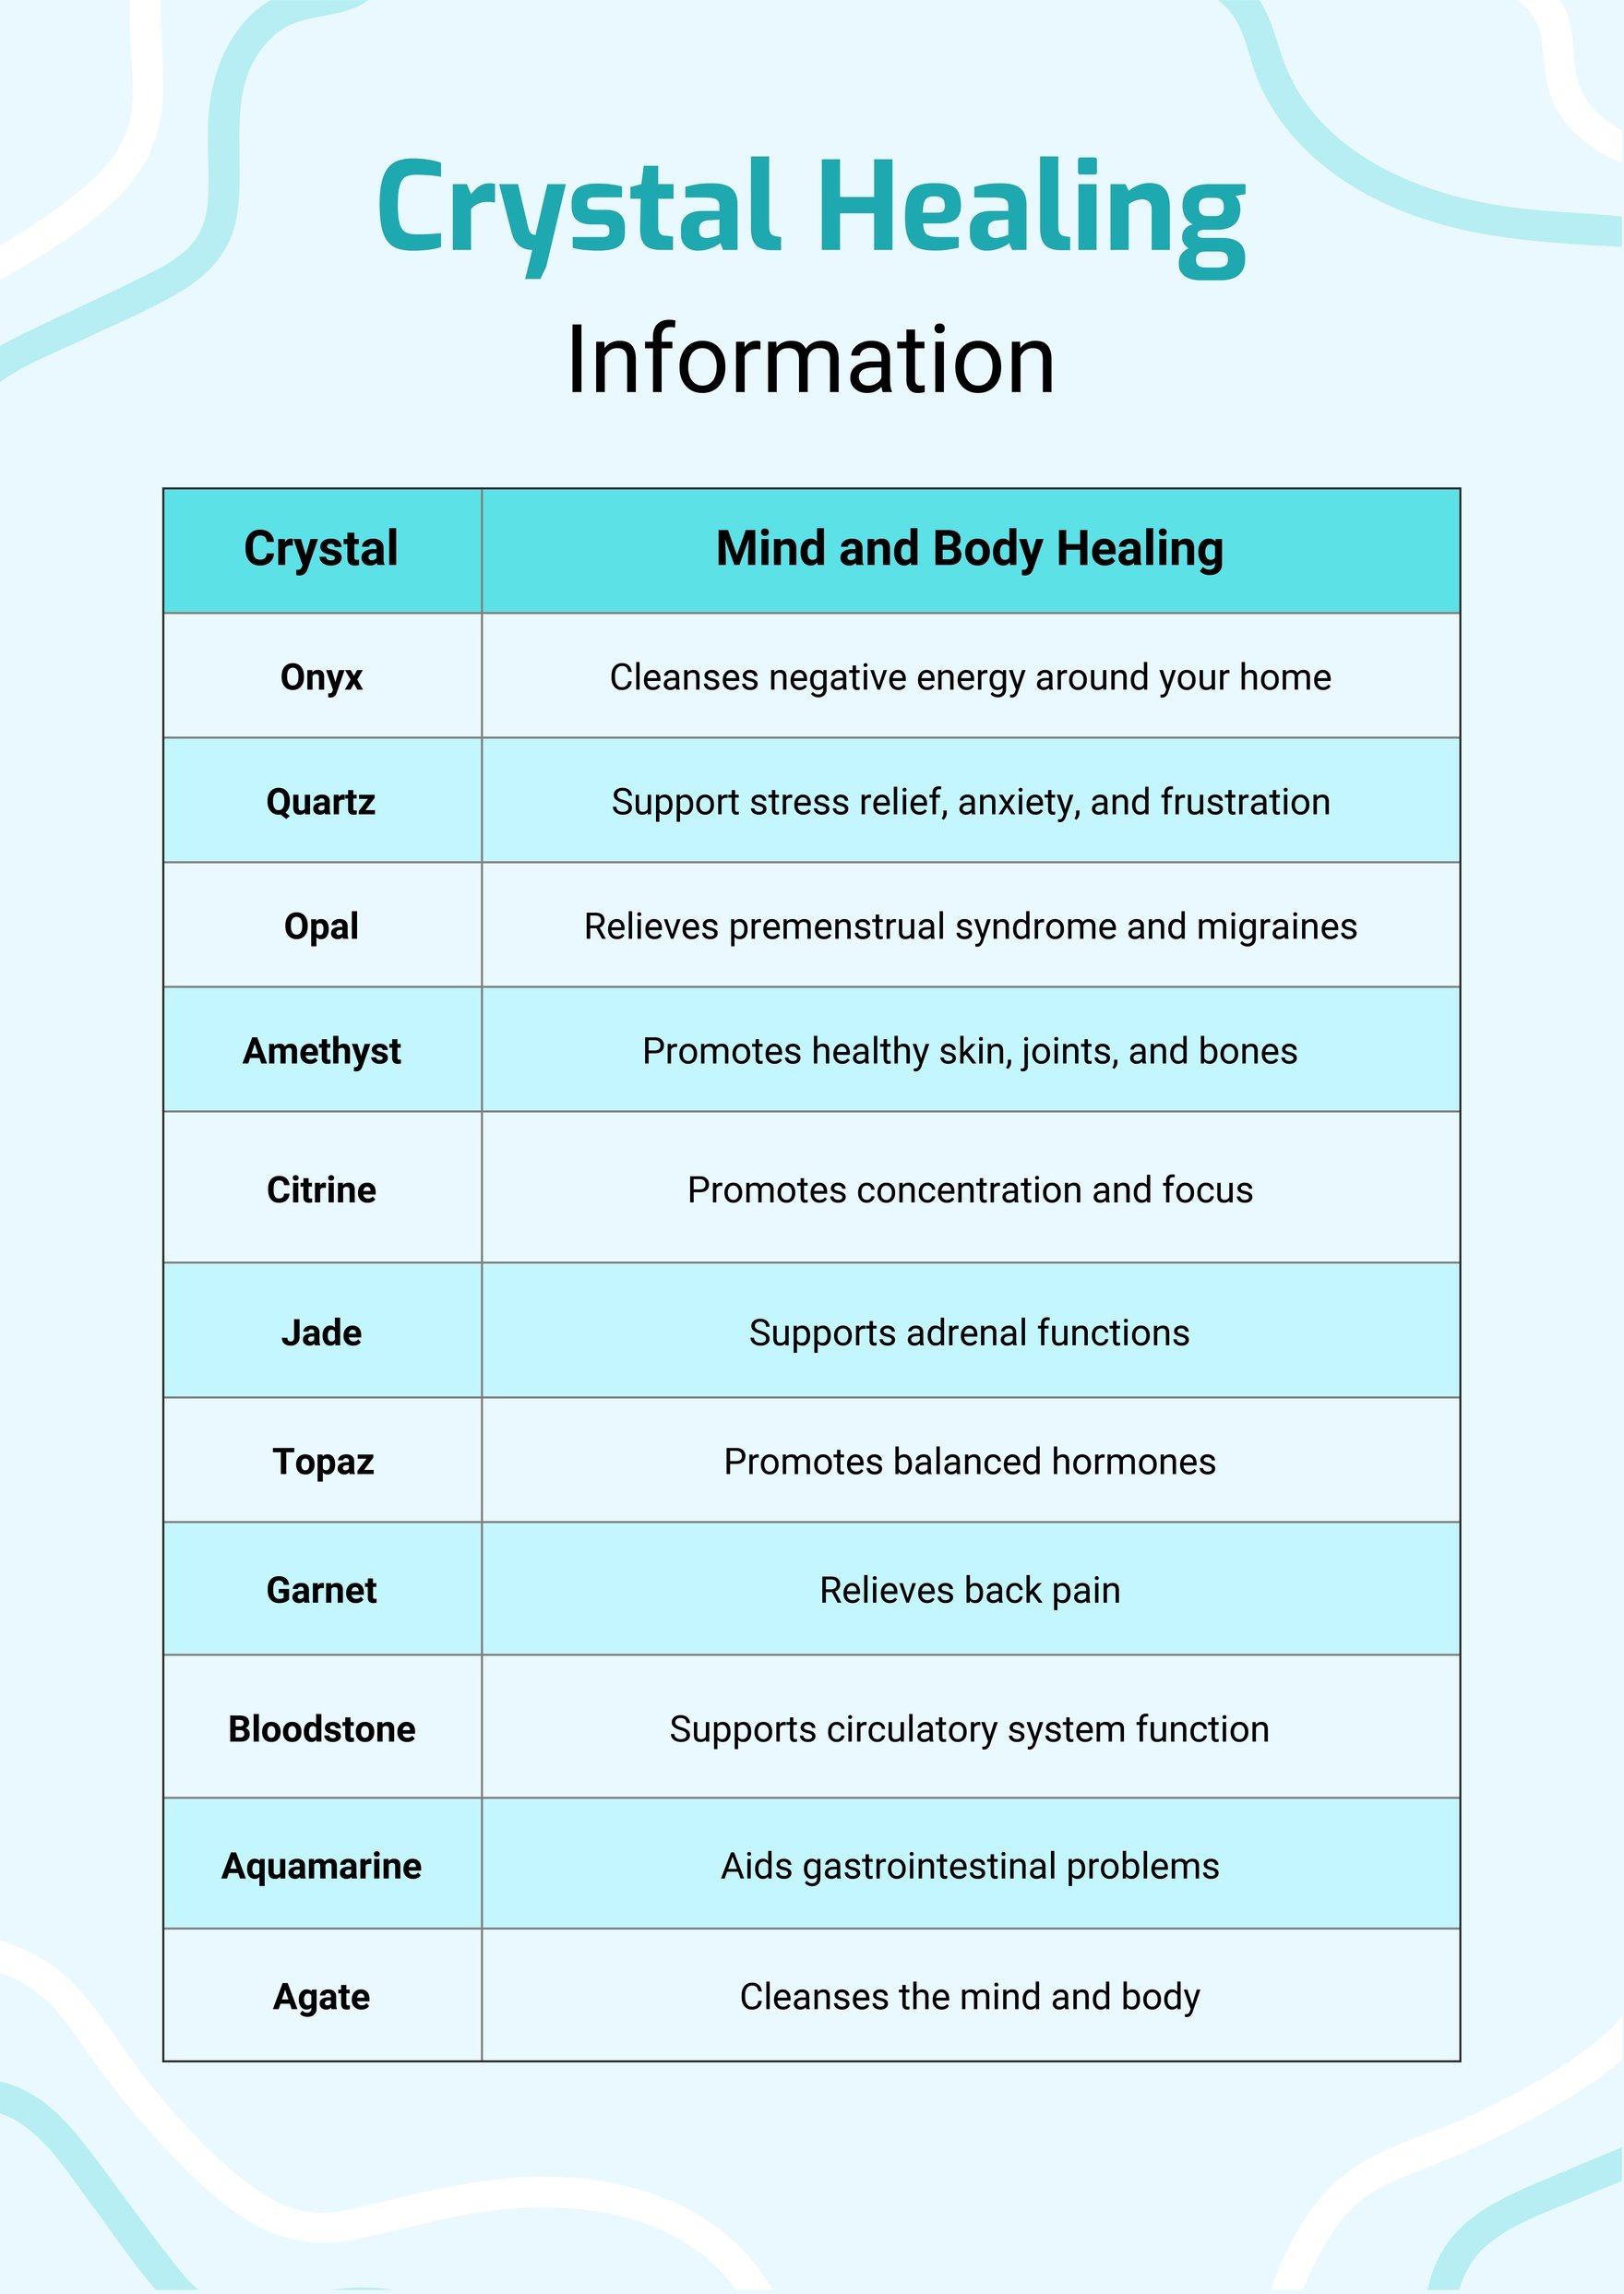 Crystal Healing Information Chart